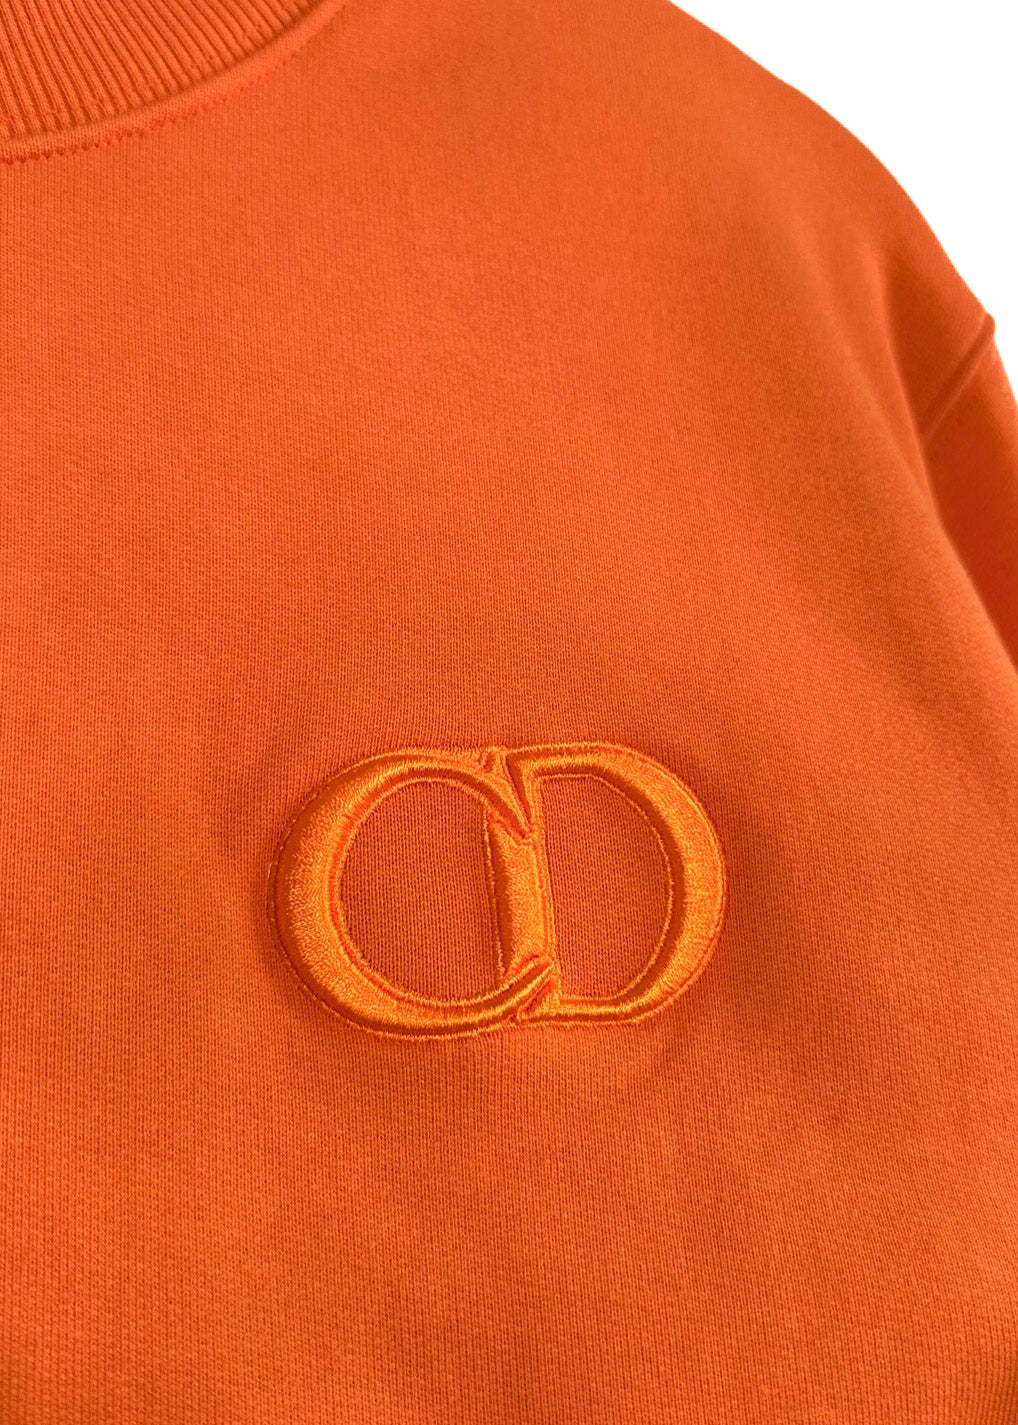 Dior Orange CD Icon Embroidered Sweatshirt